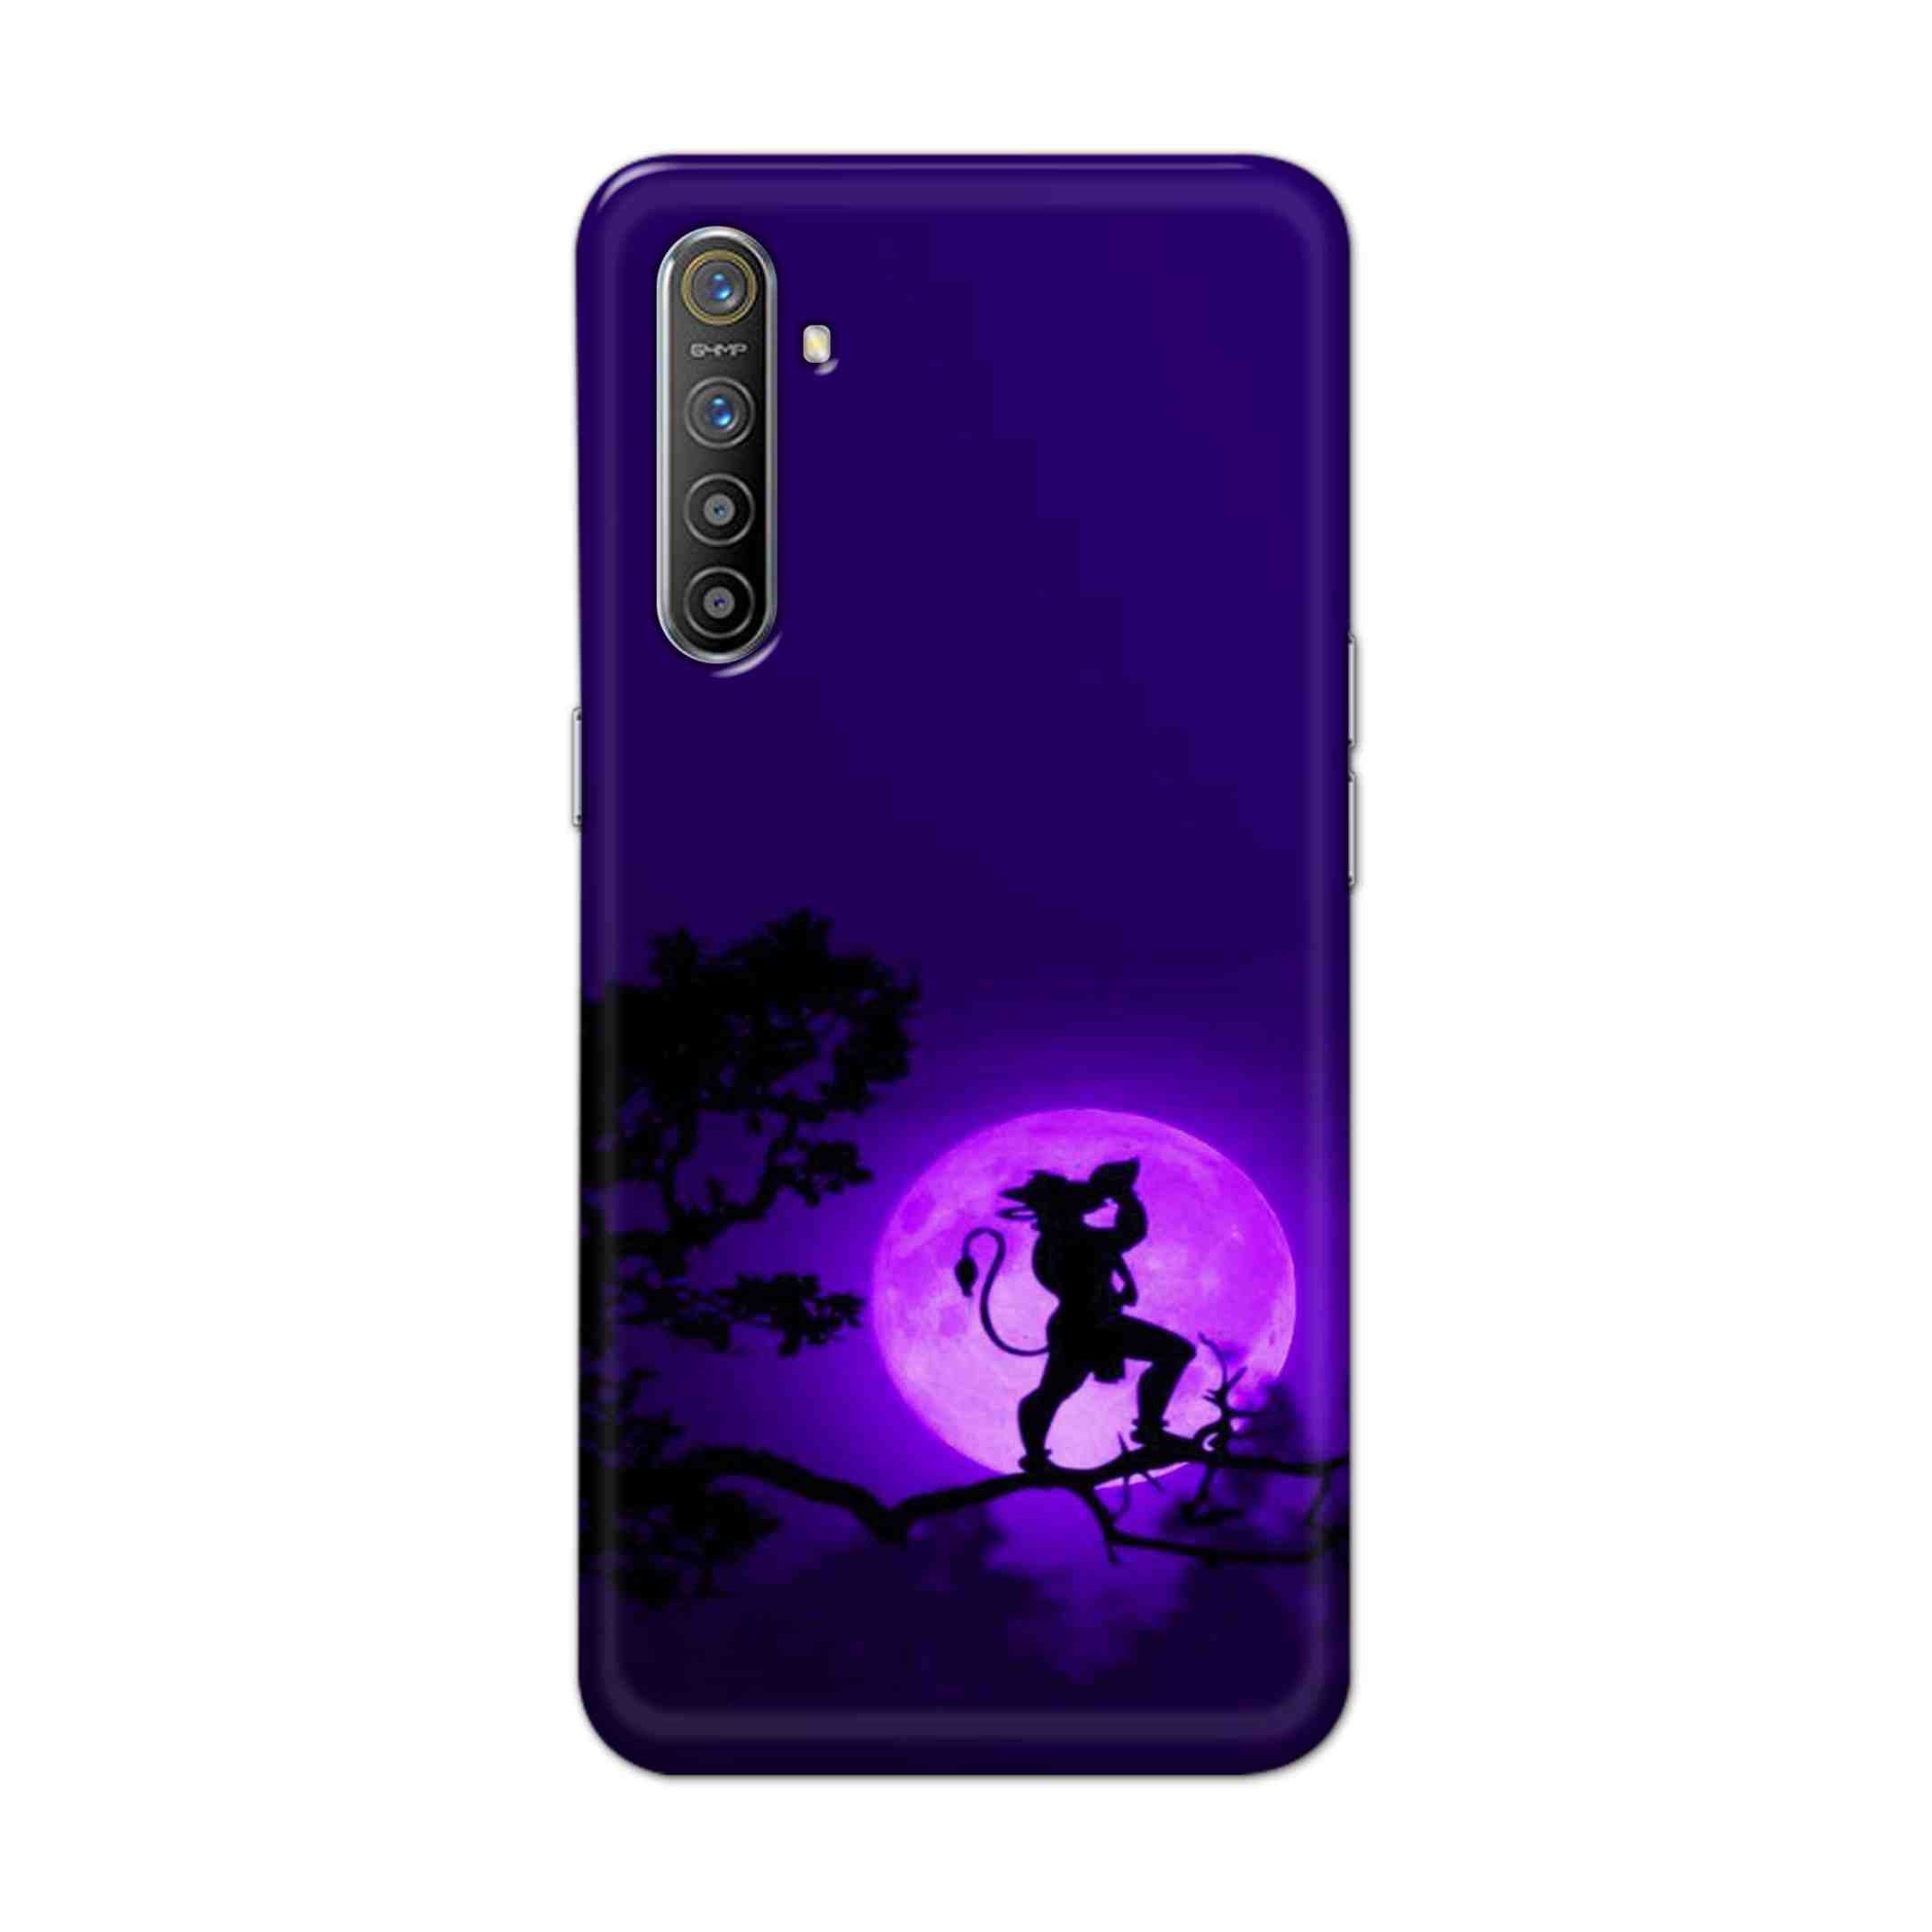 Buy Hanuman Hard Back Mobile Phone Case Cover For Oppo Realme XT Online